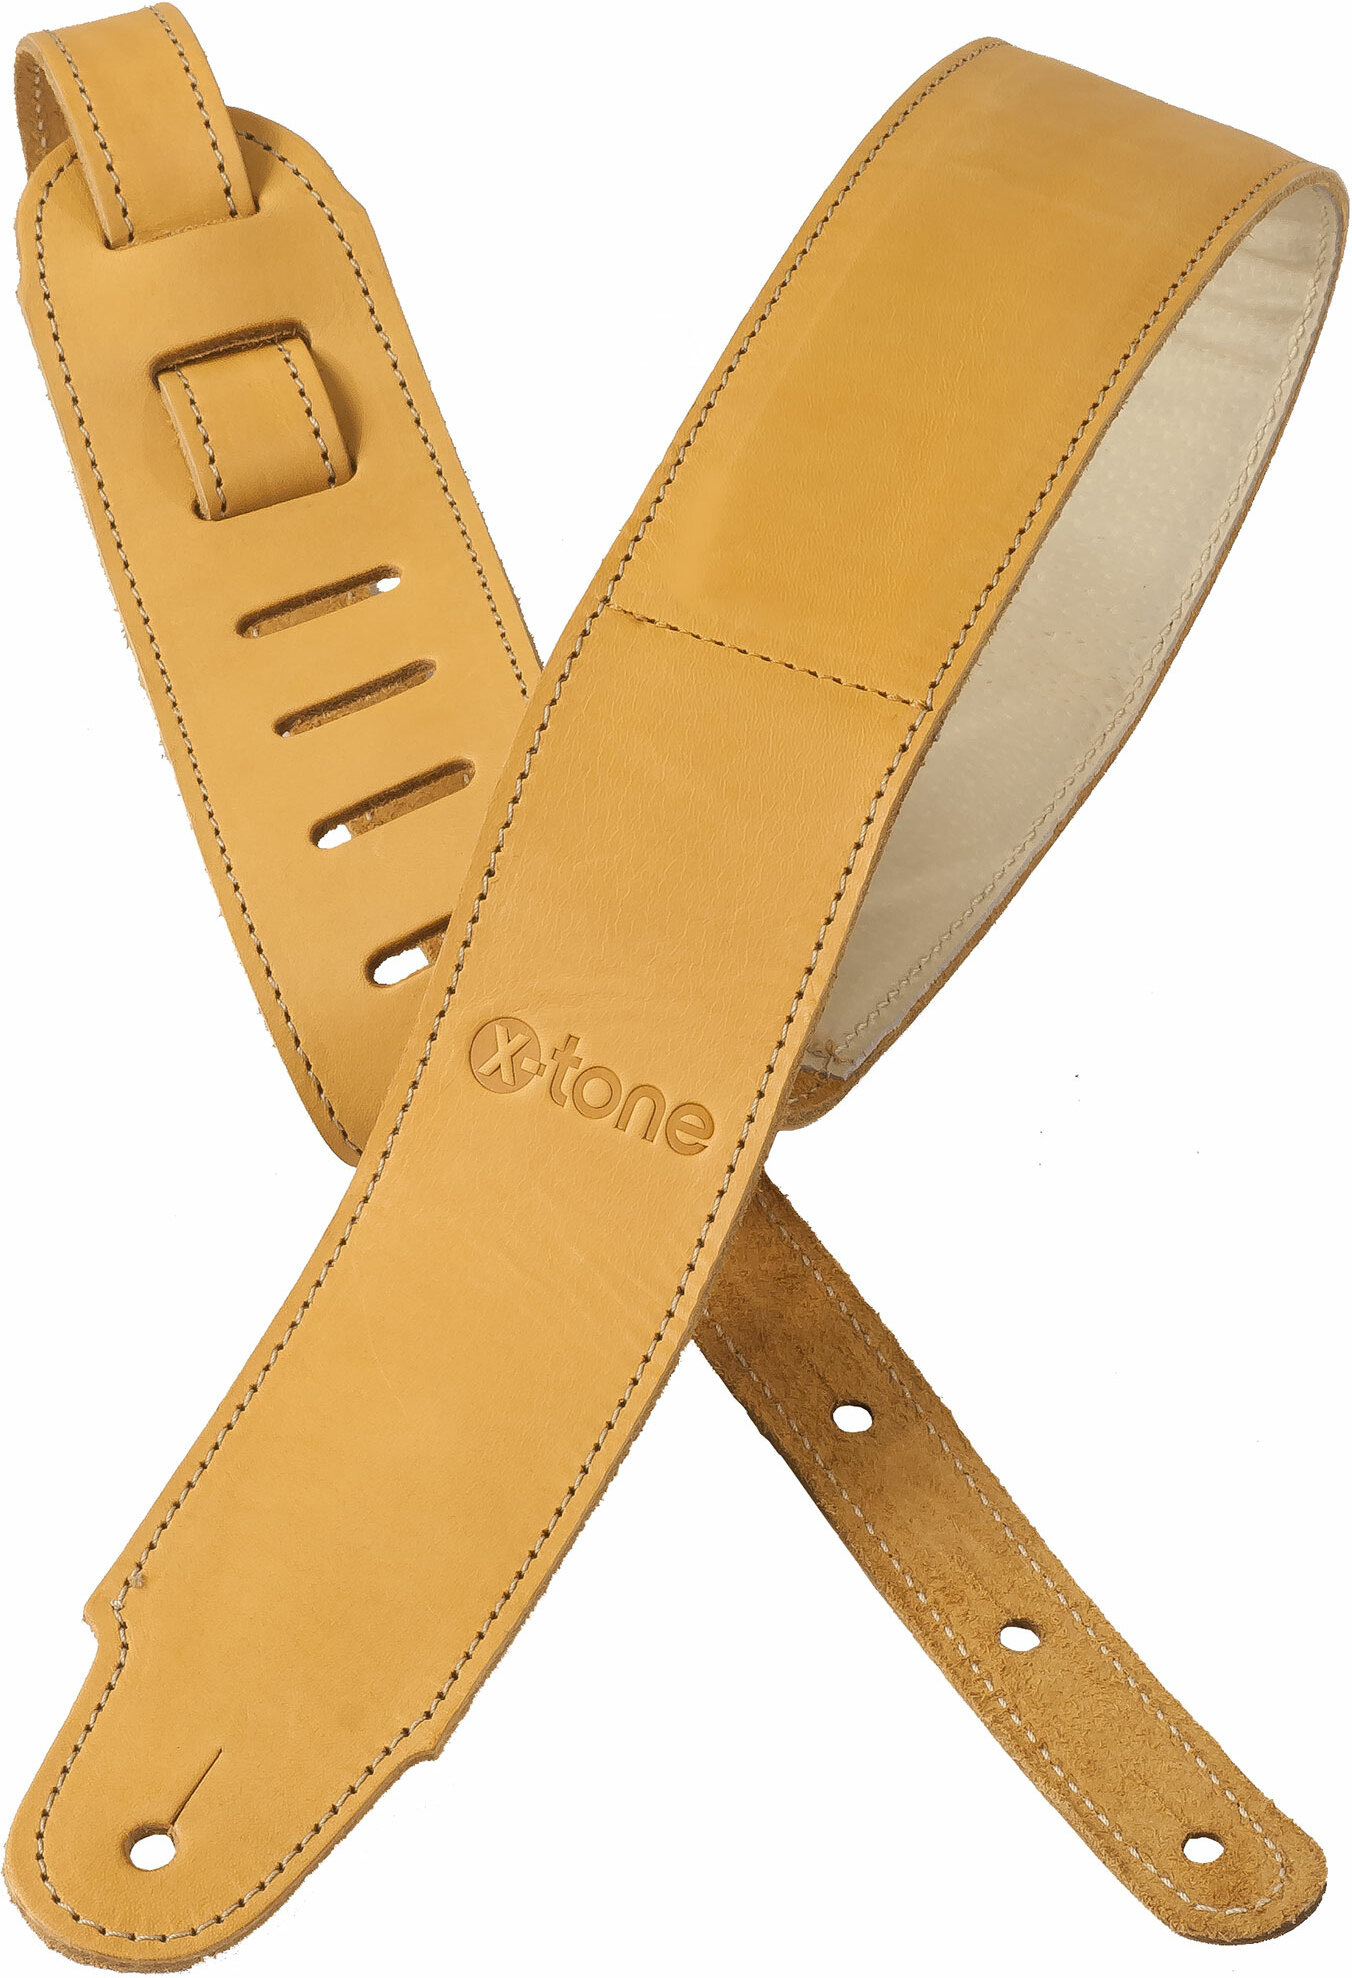 X-tone Xg 3154 Classic Plus Leather Guitar Strap Cuir RembourrÉe Brownstone Beige - Guitar strap - Main picture